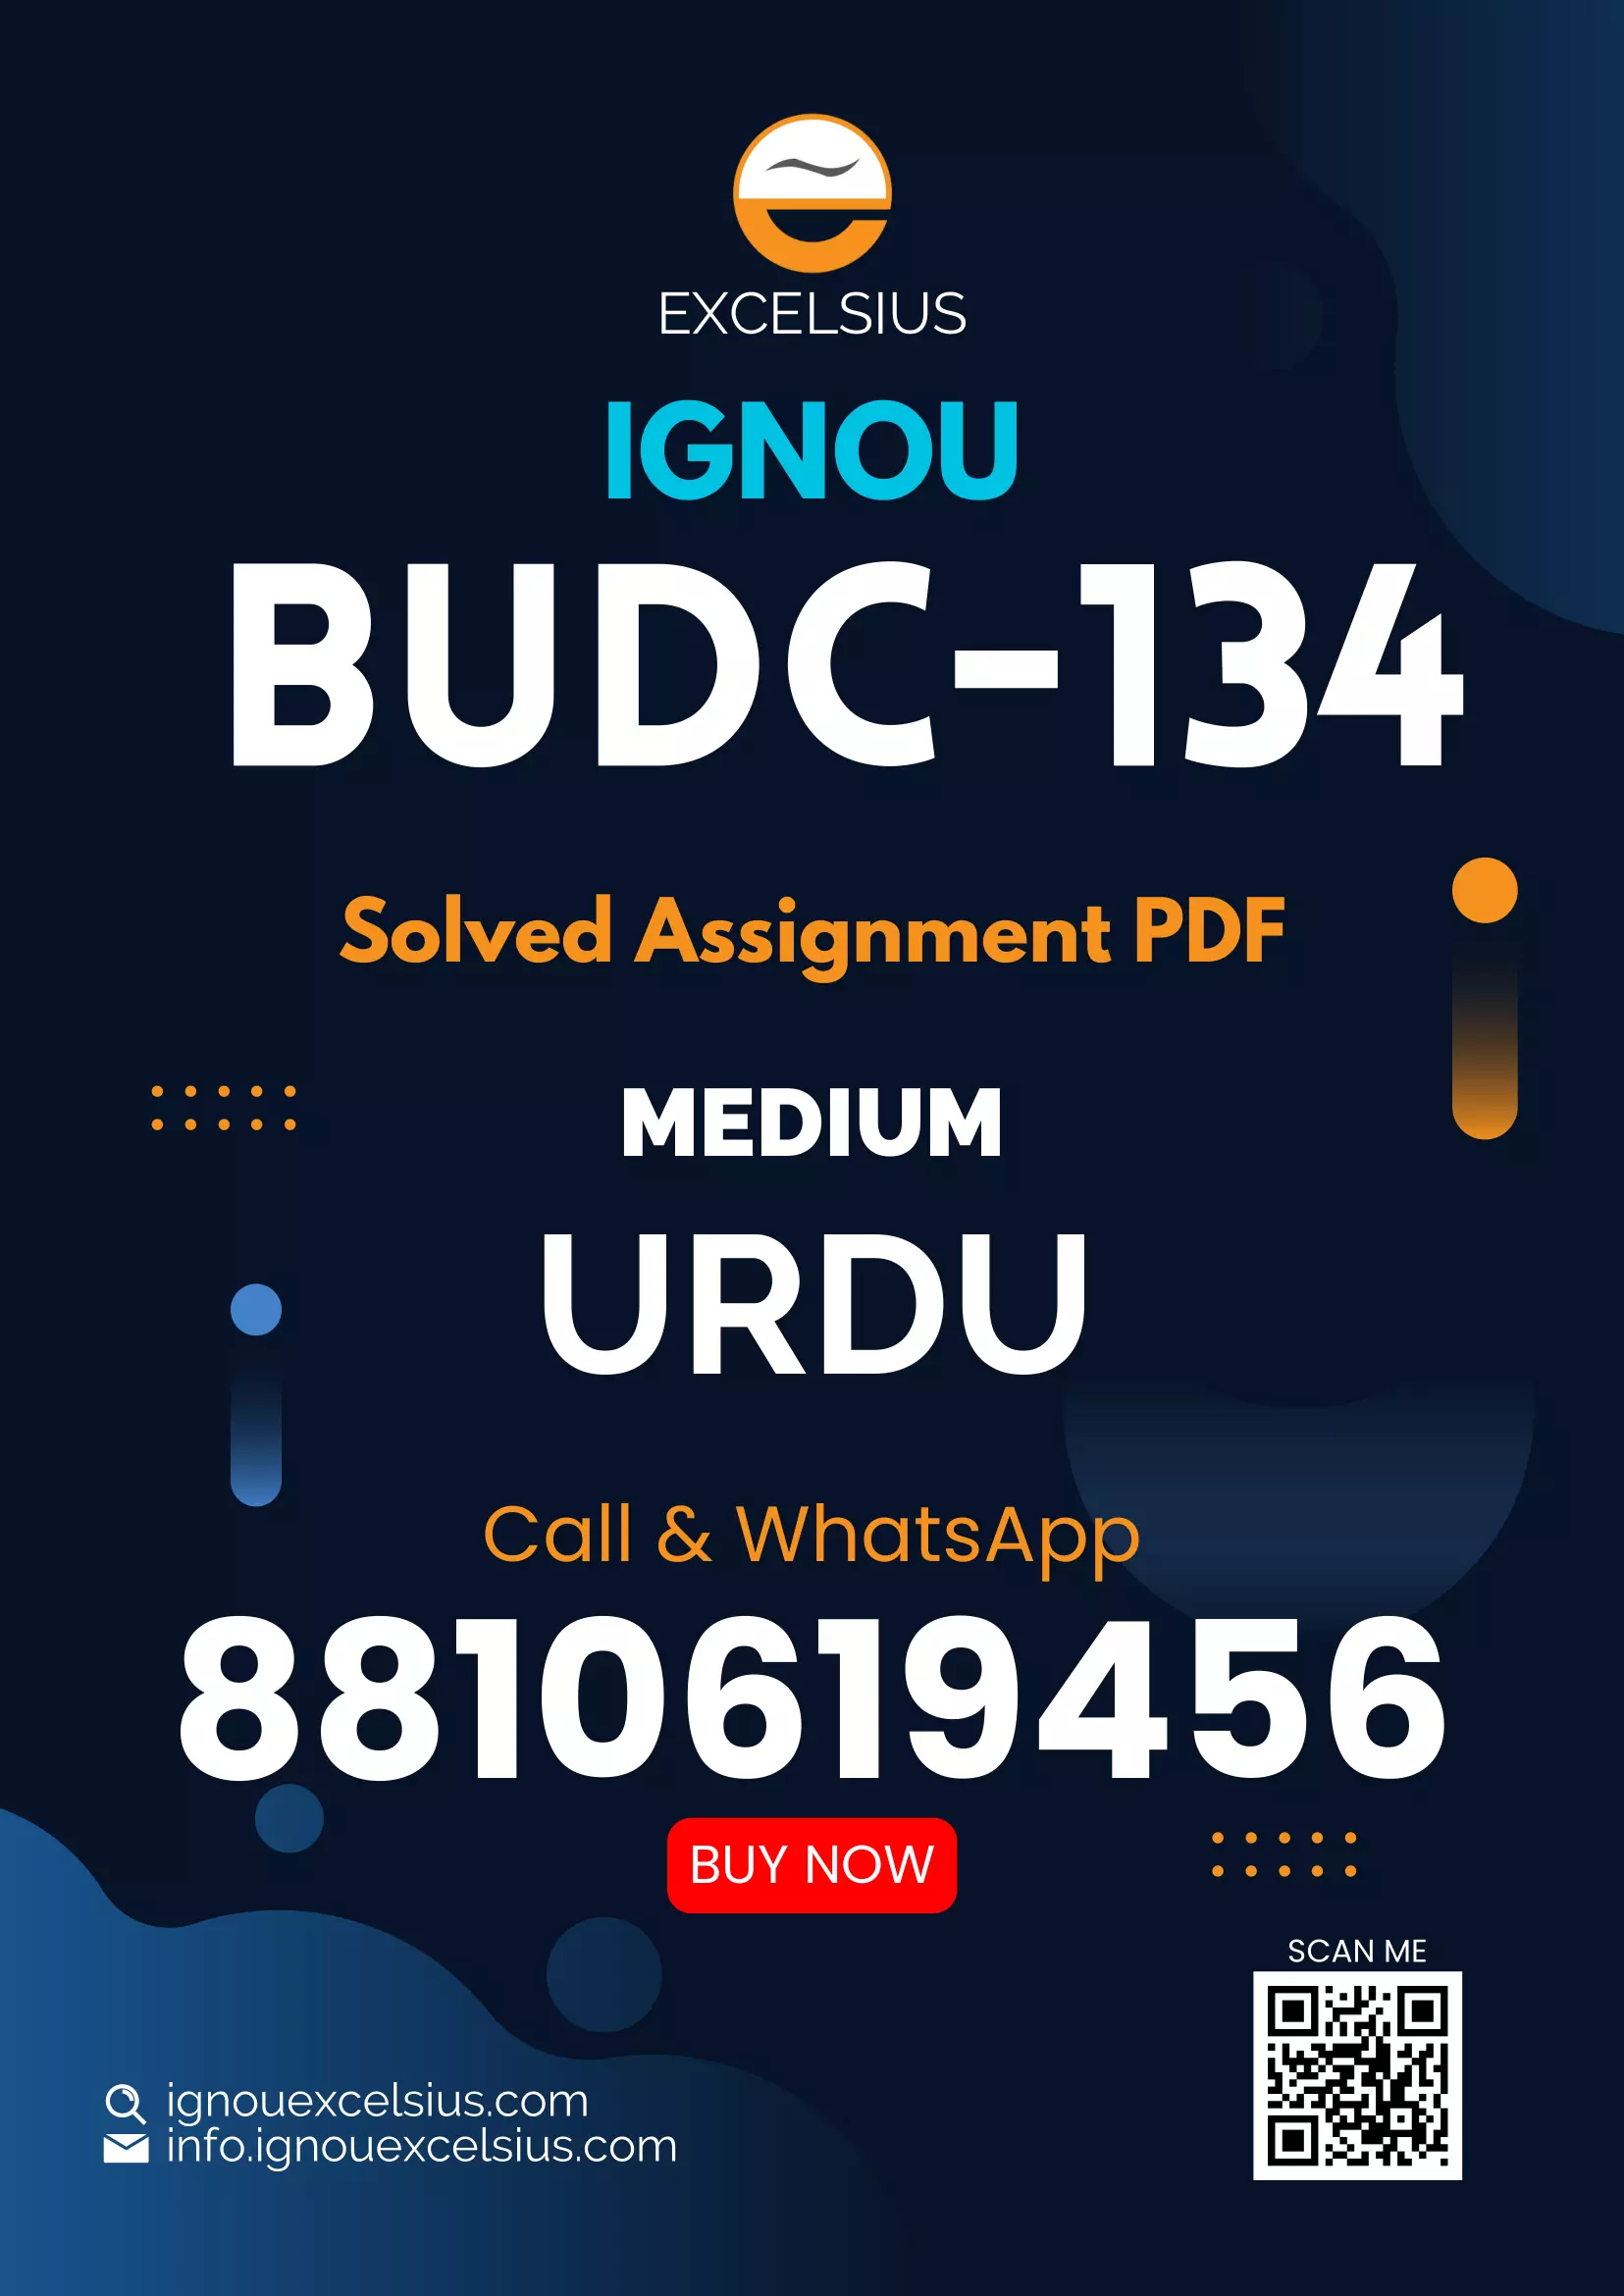 IGNOU BUDC-134 - Study of Urdu Nazm, Latest Solved Assignment-July 2022 - January 2023